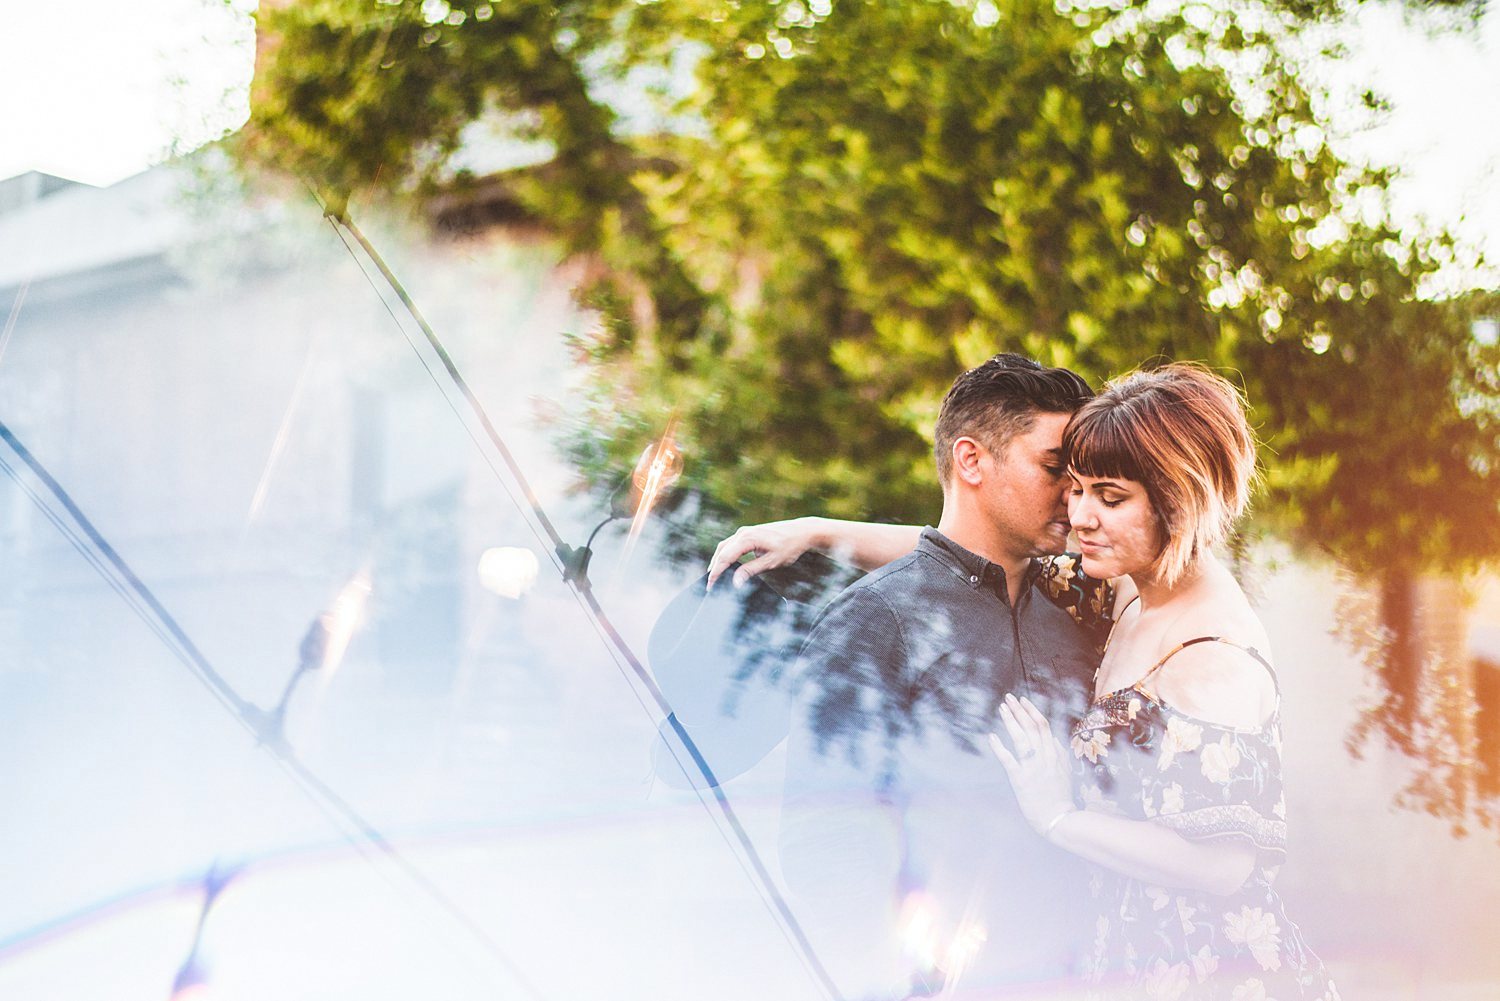 Jess Gable - 95 - Downtown Phoenix Engagement Session by Wedding Photographer Ryan Inman.jpg